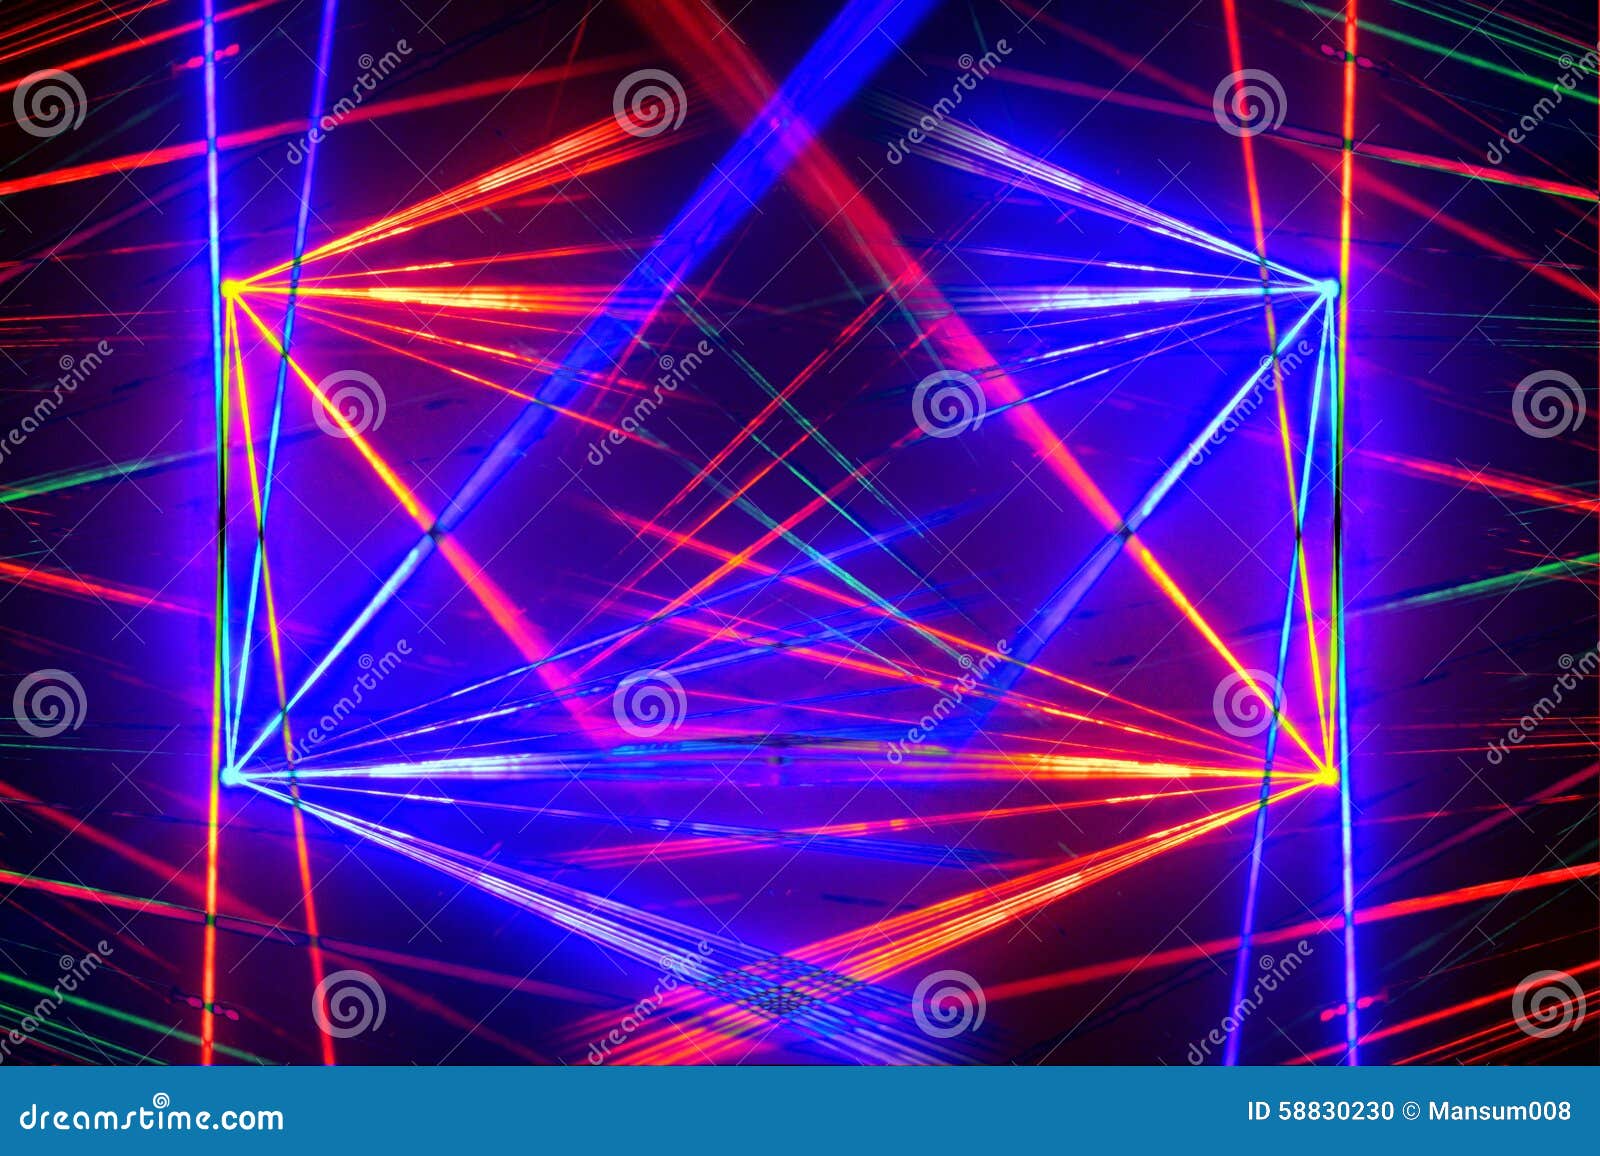 Laser light background stock photo. Image of beauty, club - 58830230